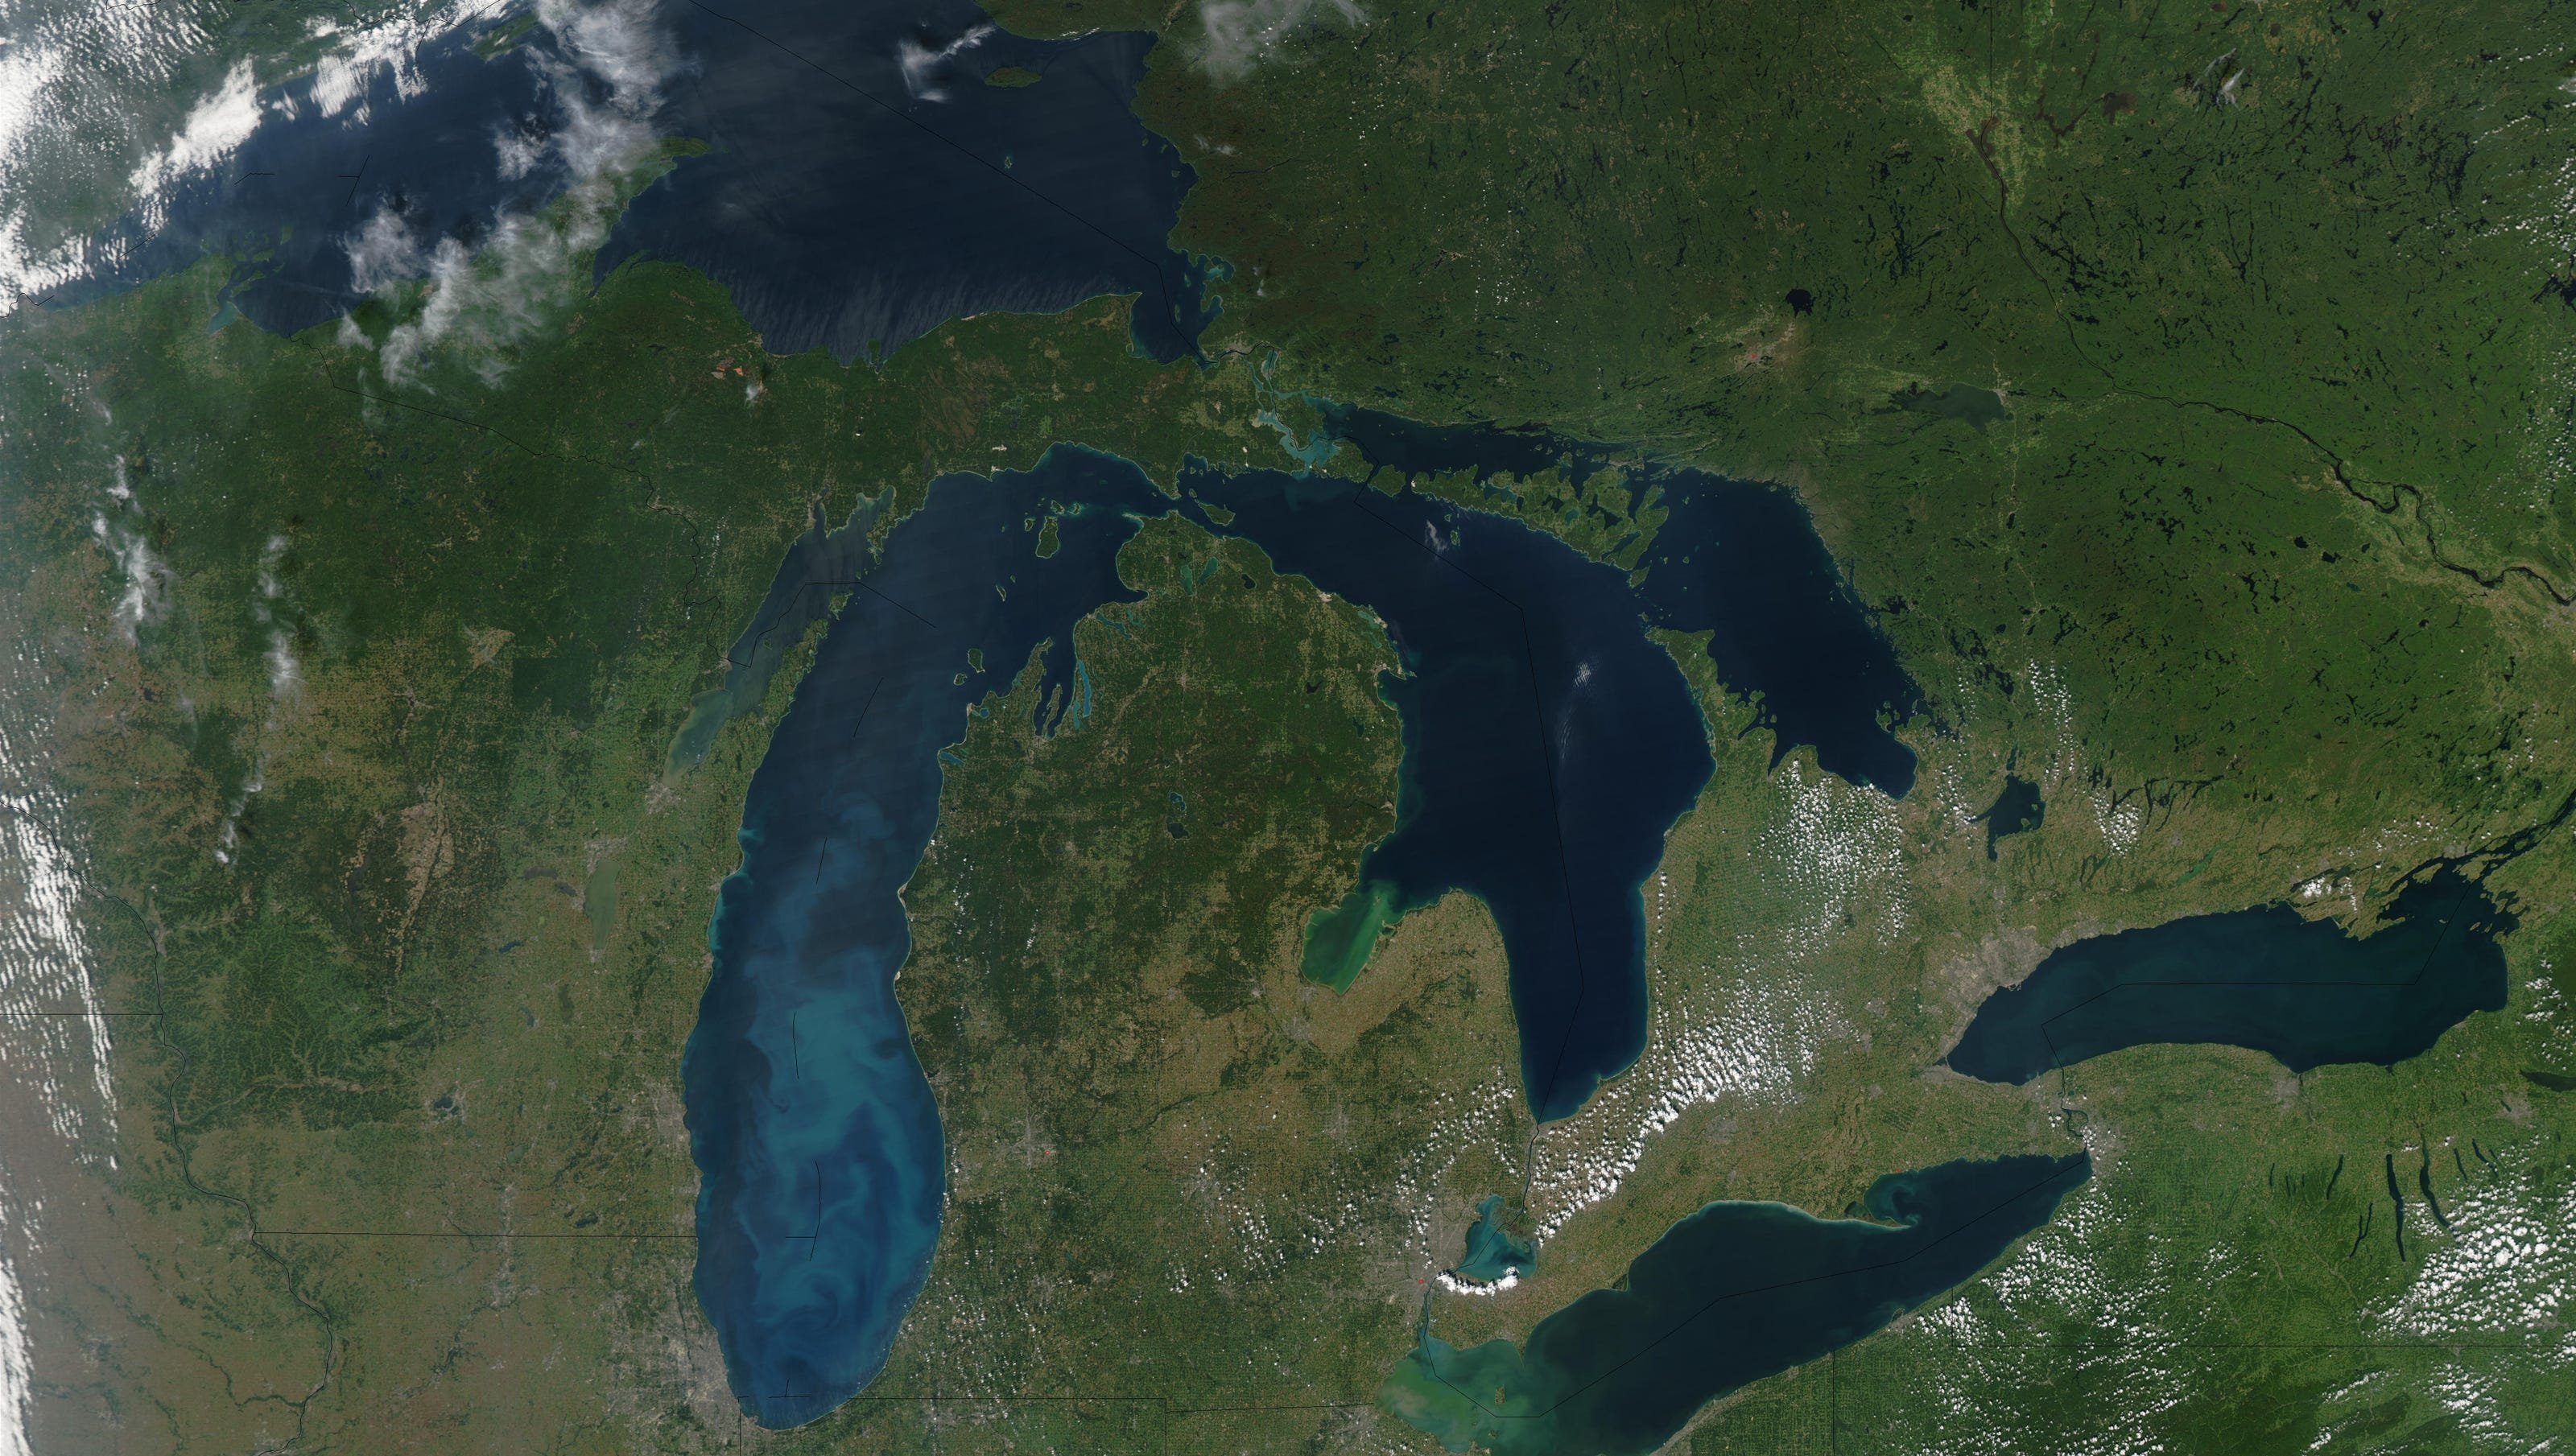 Озеро Гурон Северная Америка. Великие озера (бассейн Атлантического океана). Великие американские озёра верхнее Гурон Мичиган Эри Онтарио. Великие американские озера Северной Америки.